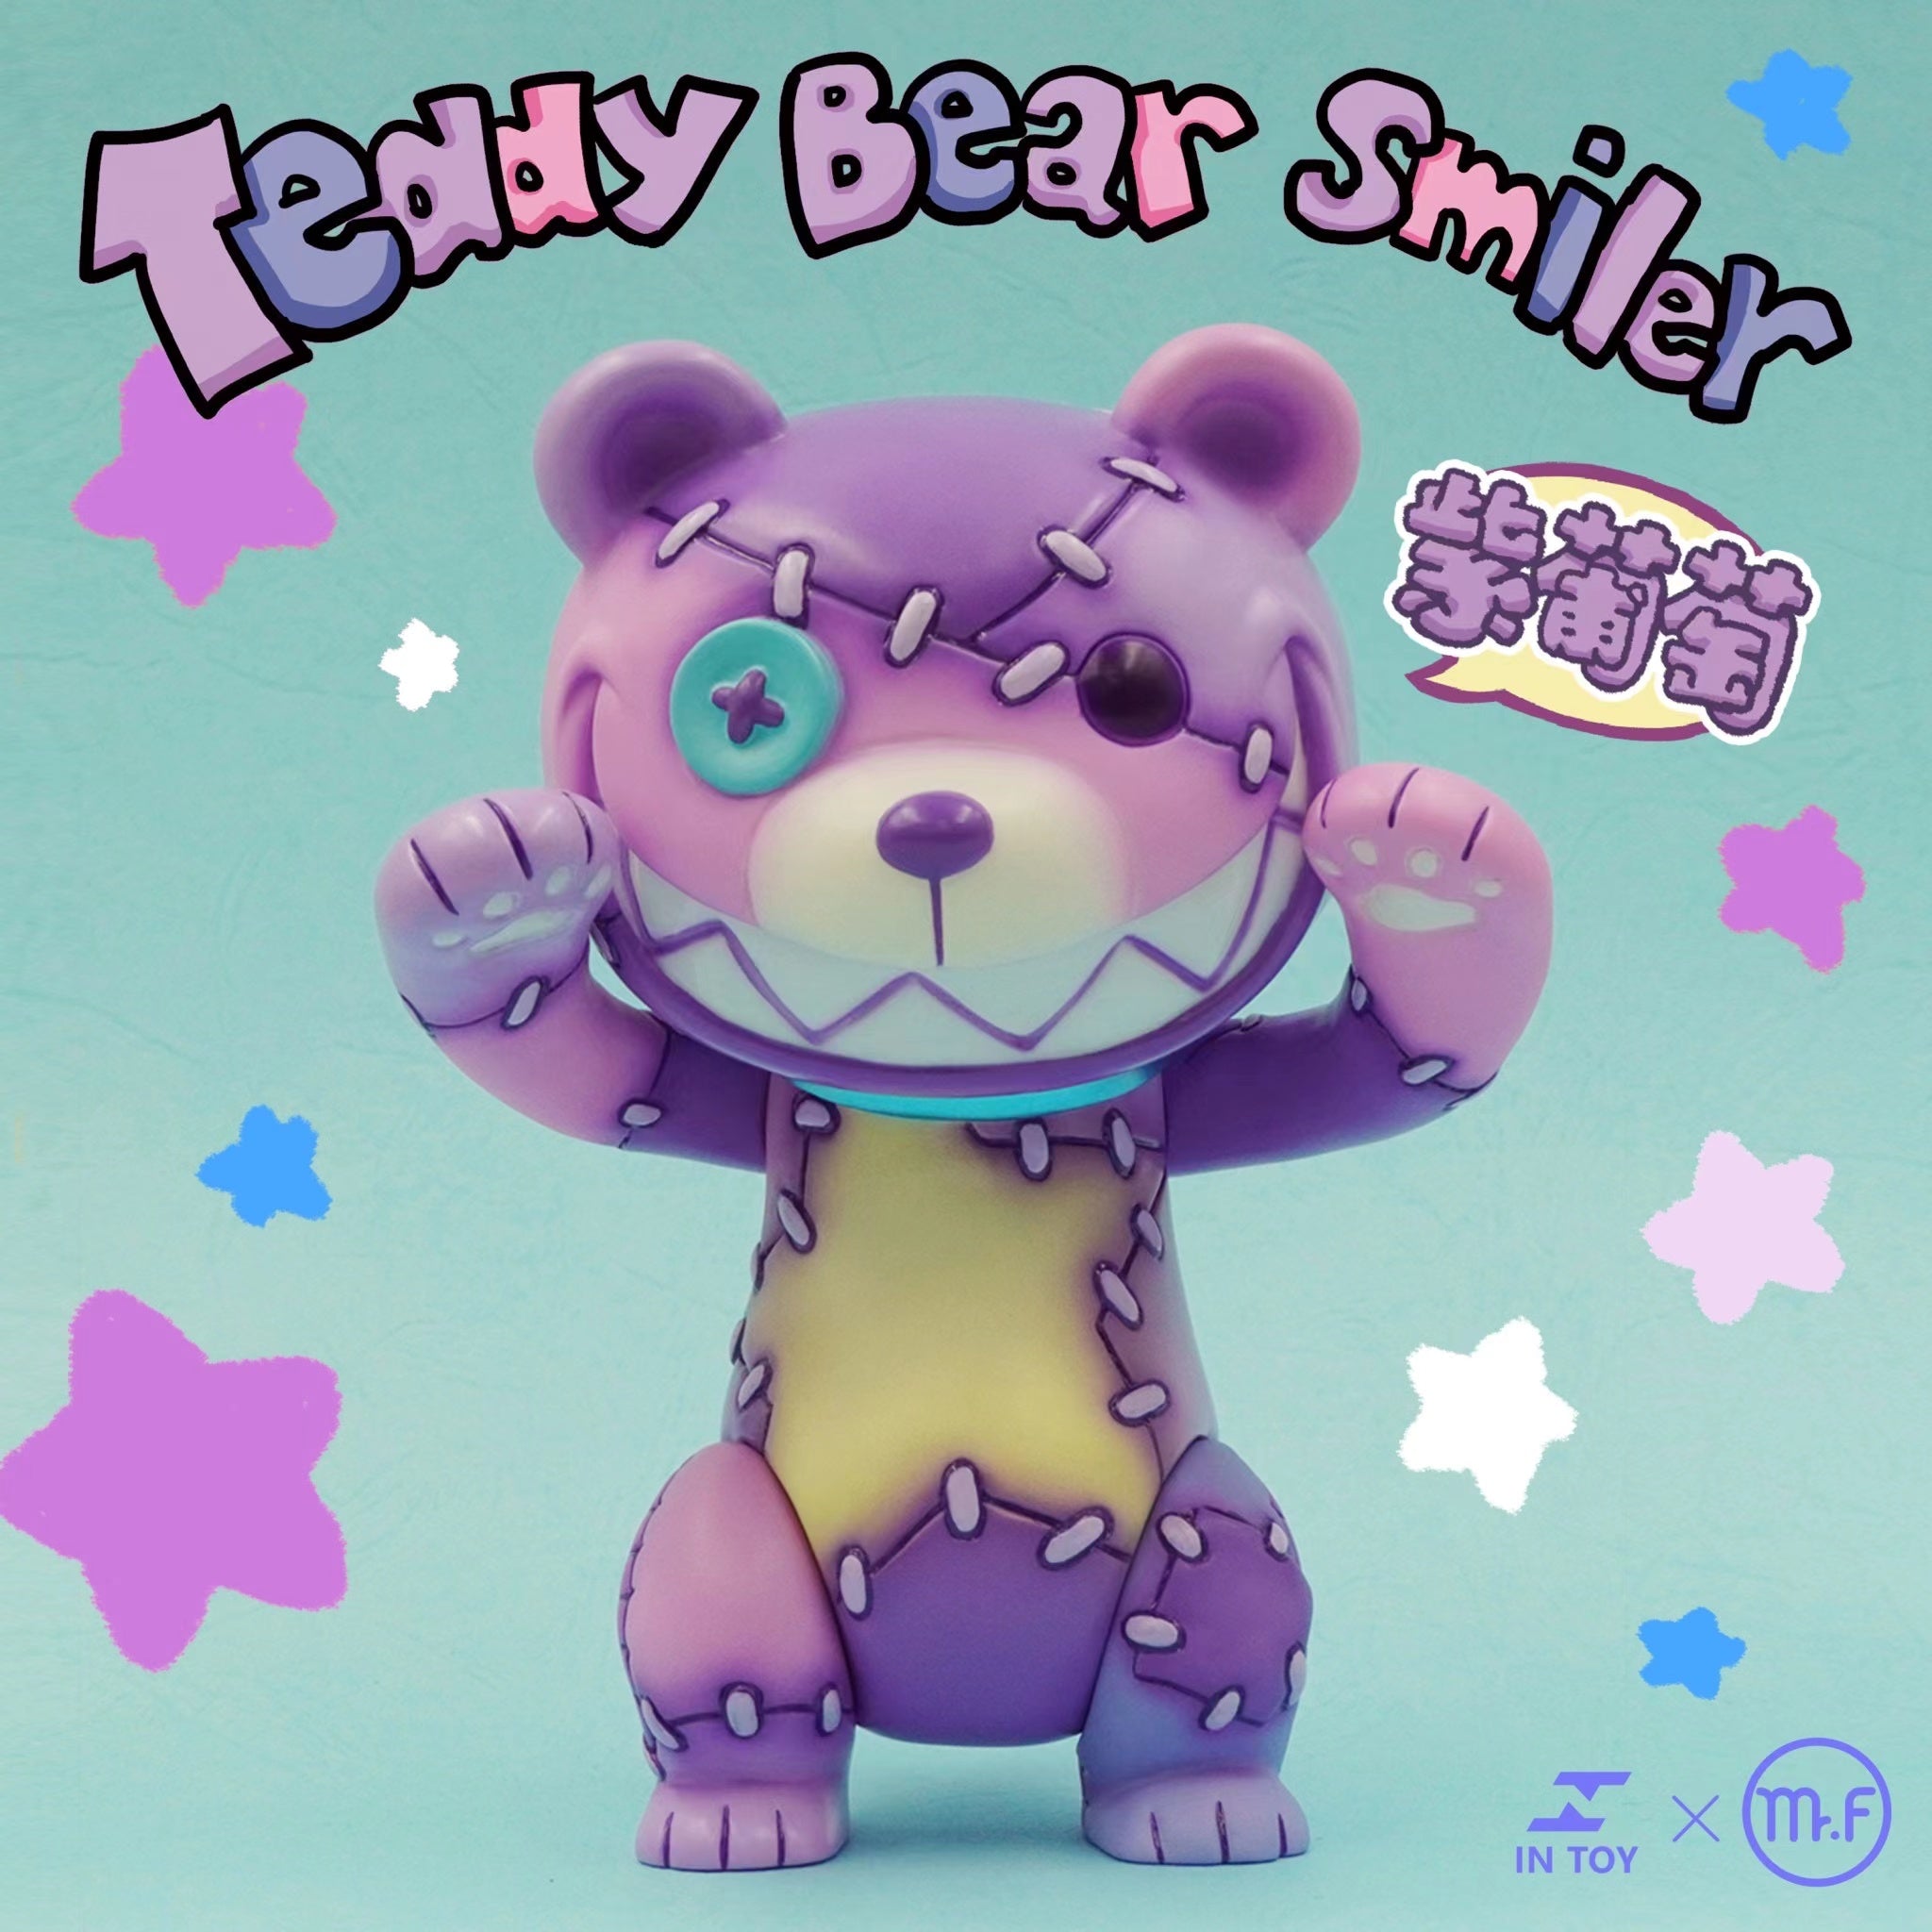 Teddy Bear Smilers - purple grape .Ver by Mr. F